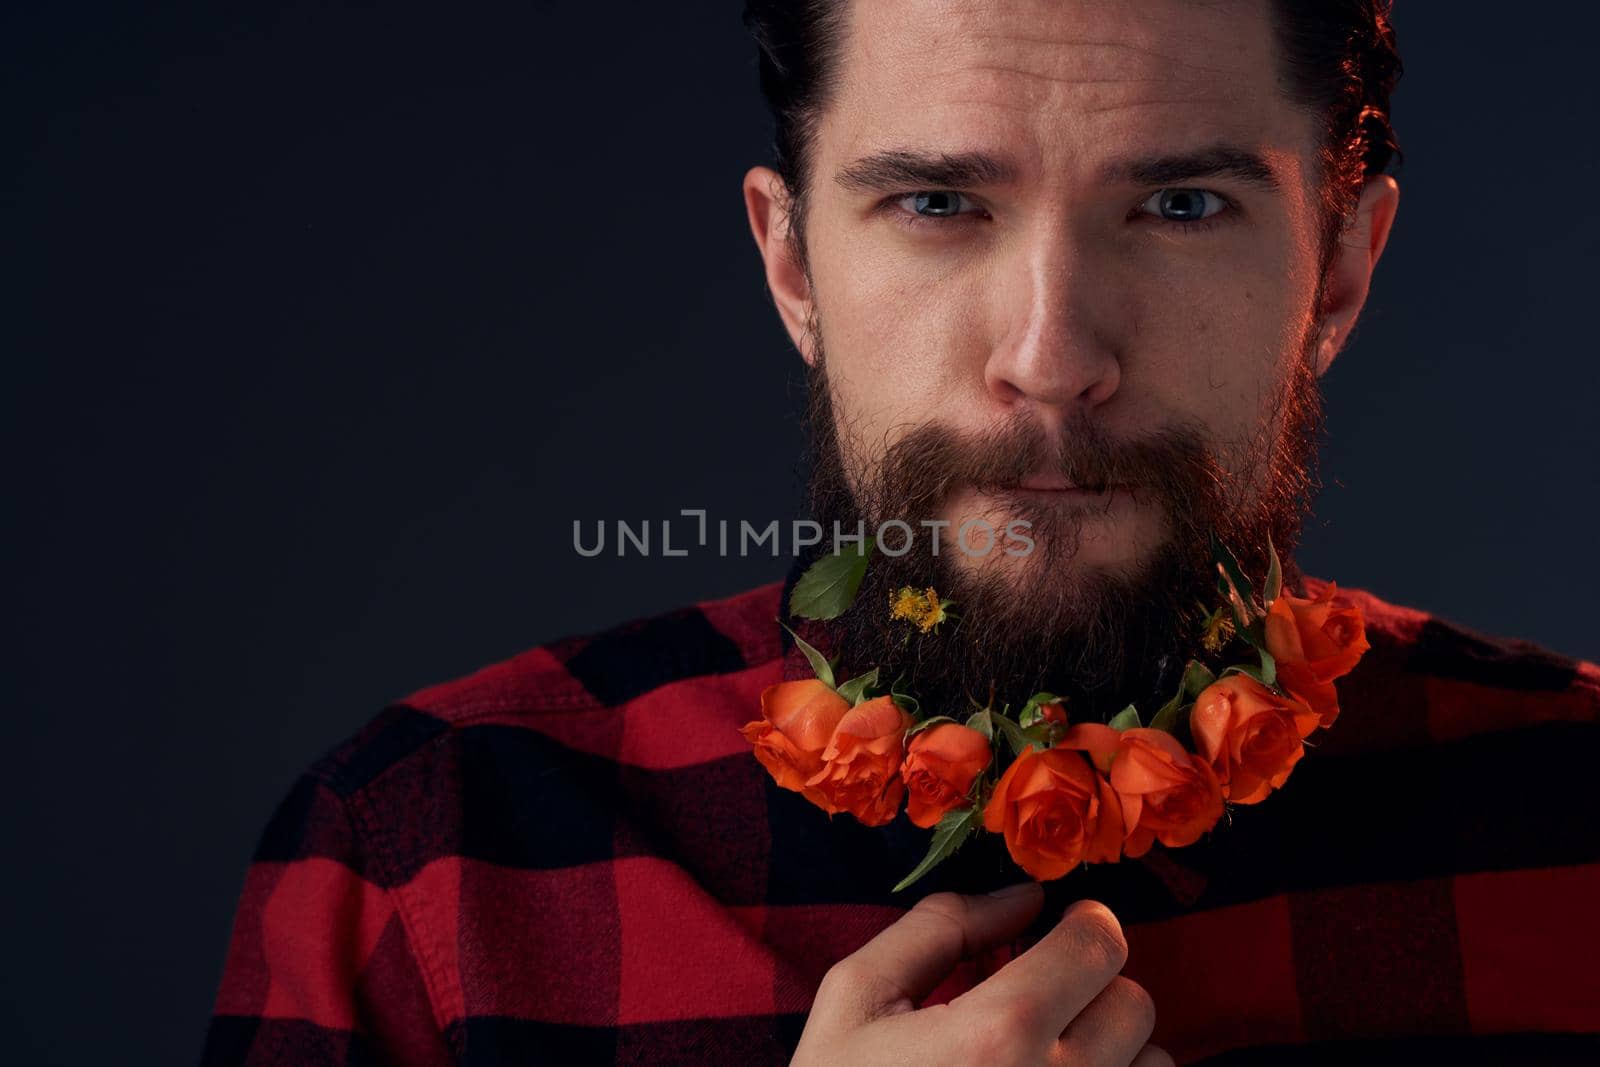 Cute bearded man flowers decoration plaid shirt emotions by SHOTPRIME